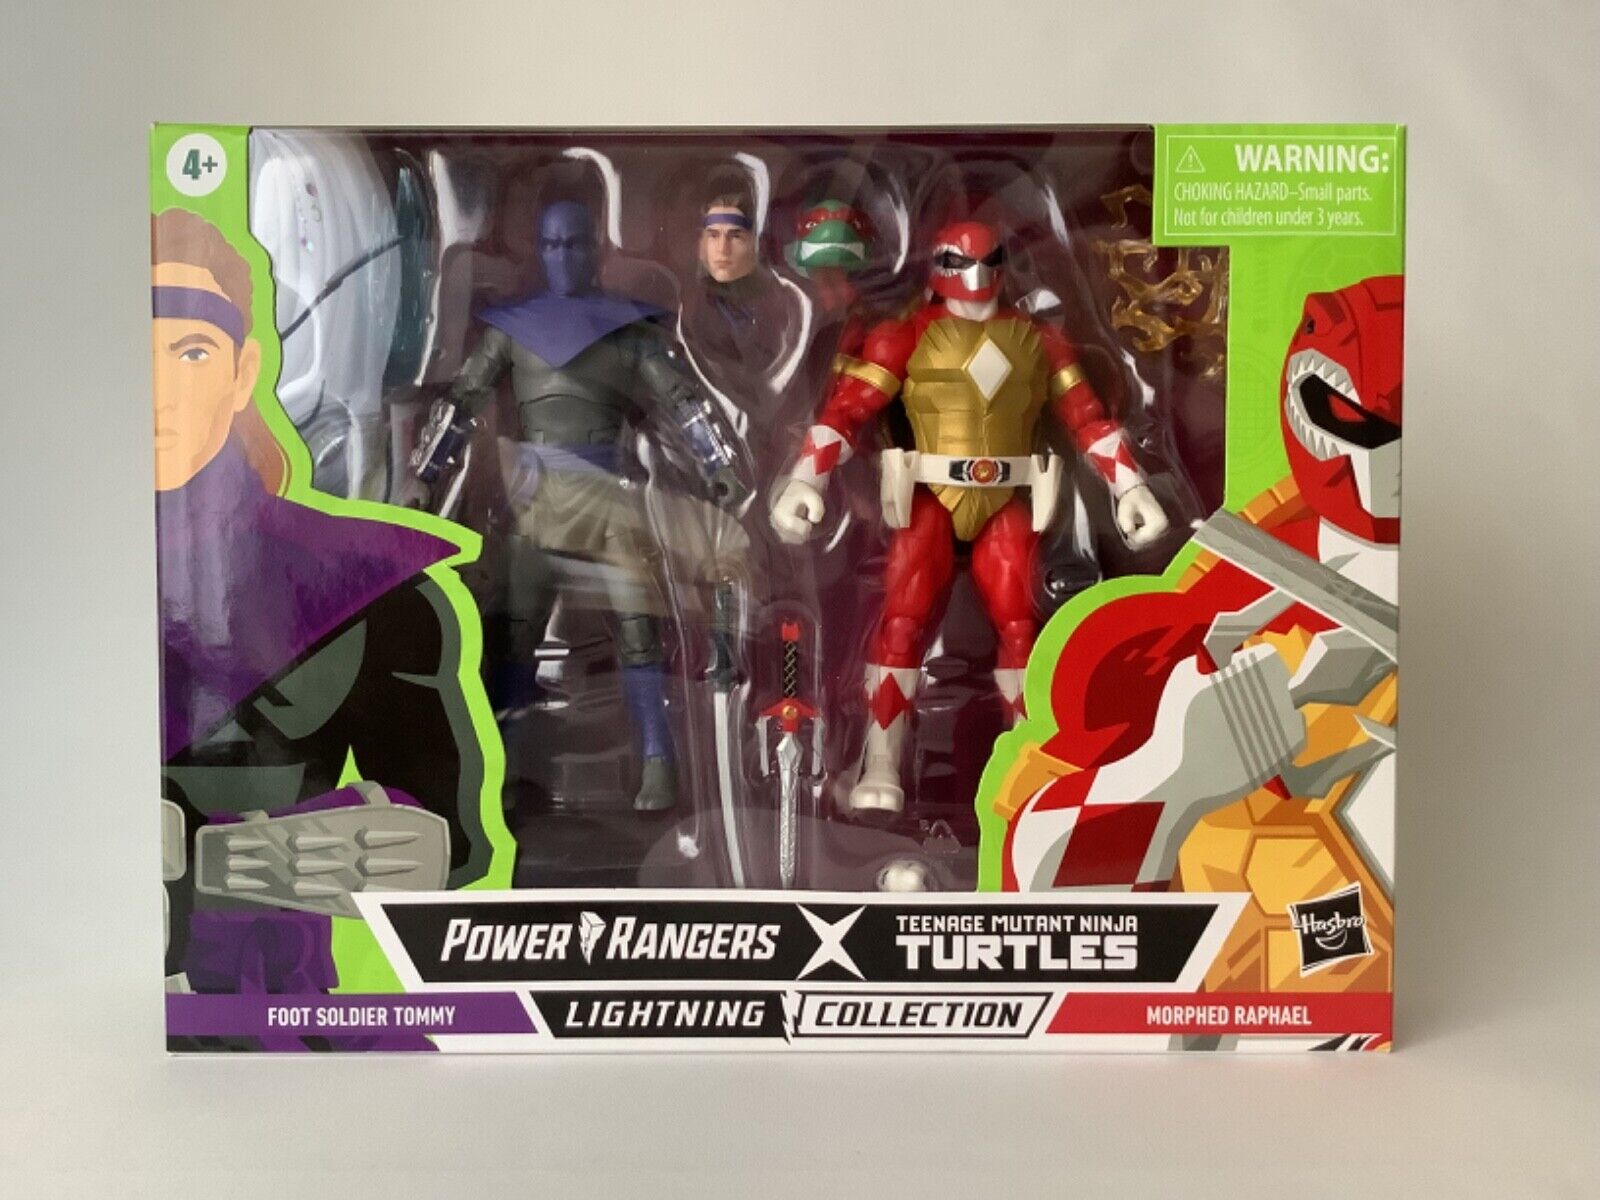 Power Rangers X Teenage Mutant Ninja Turtles Lightning Collection Morphed Raph